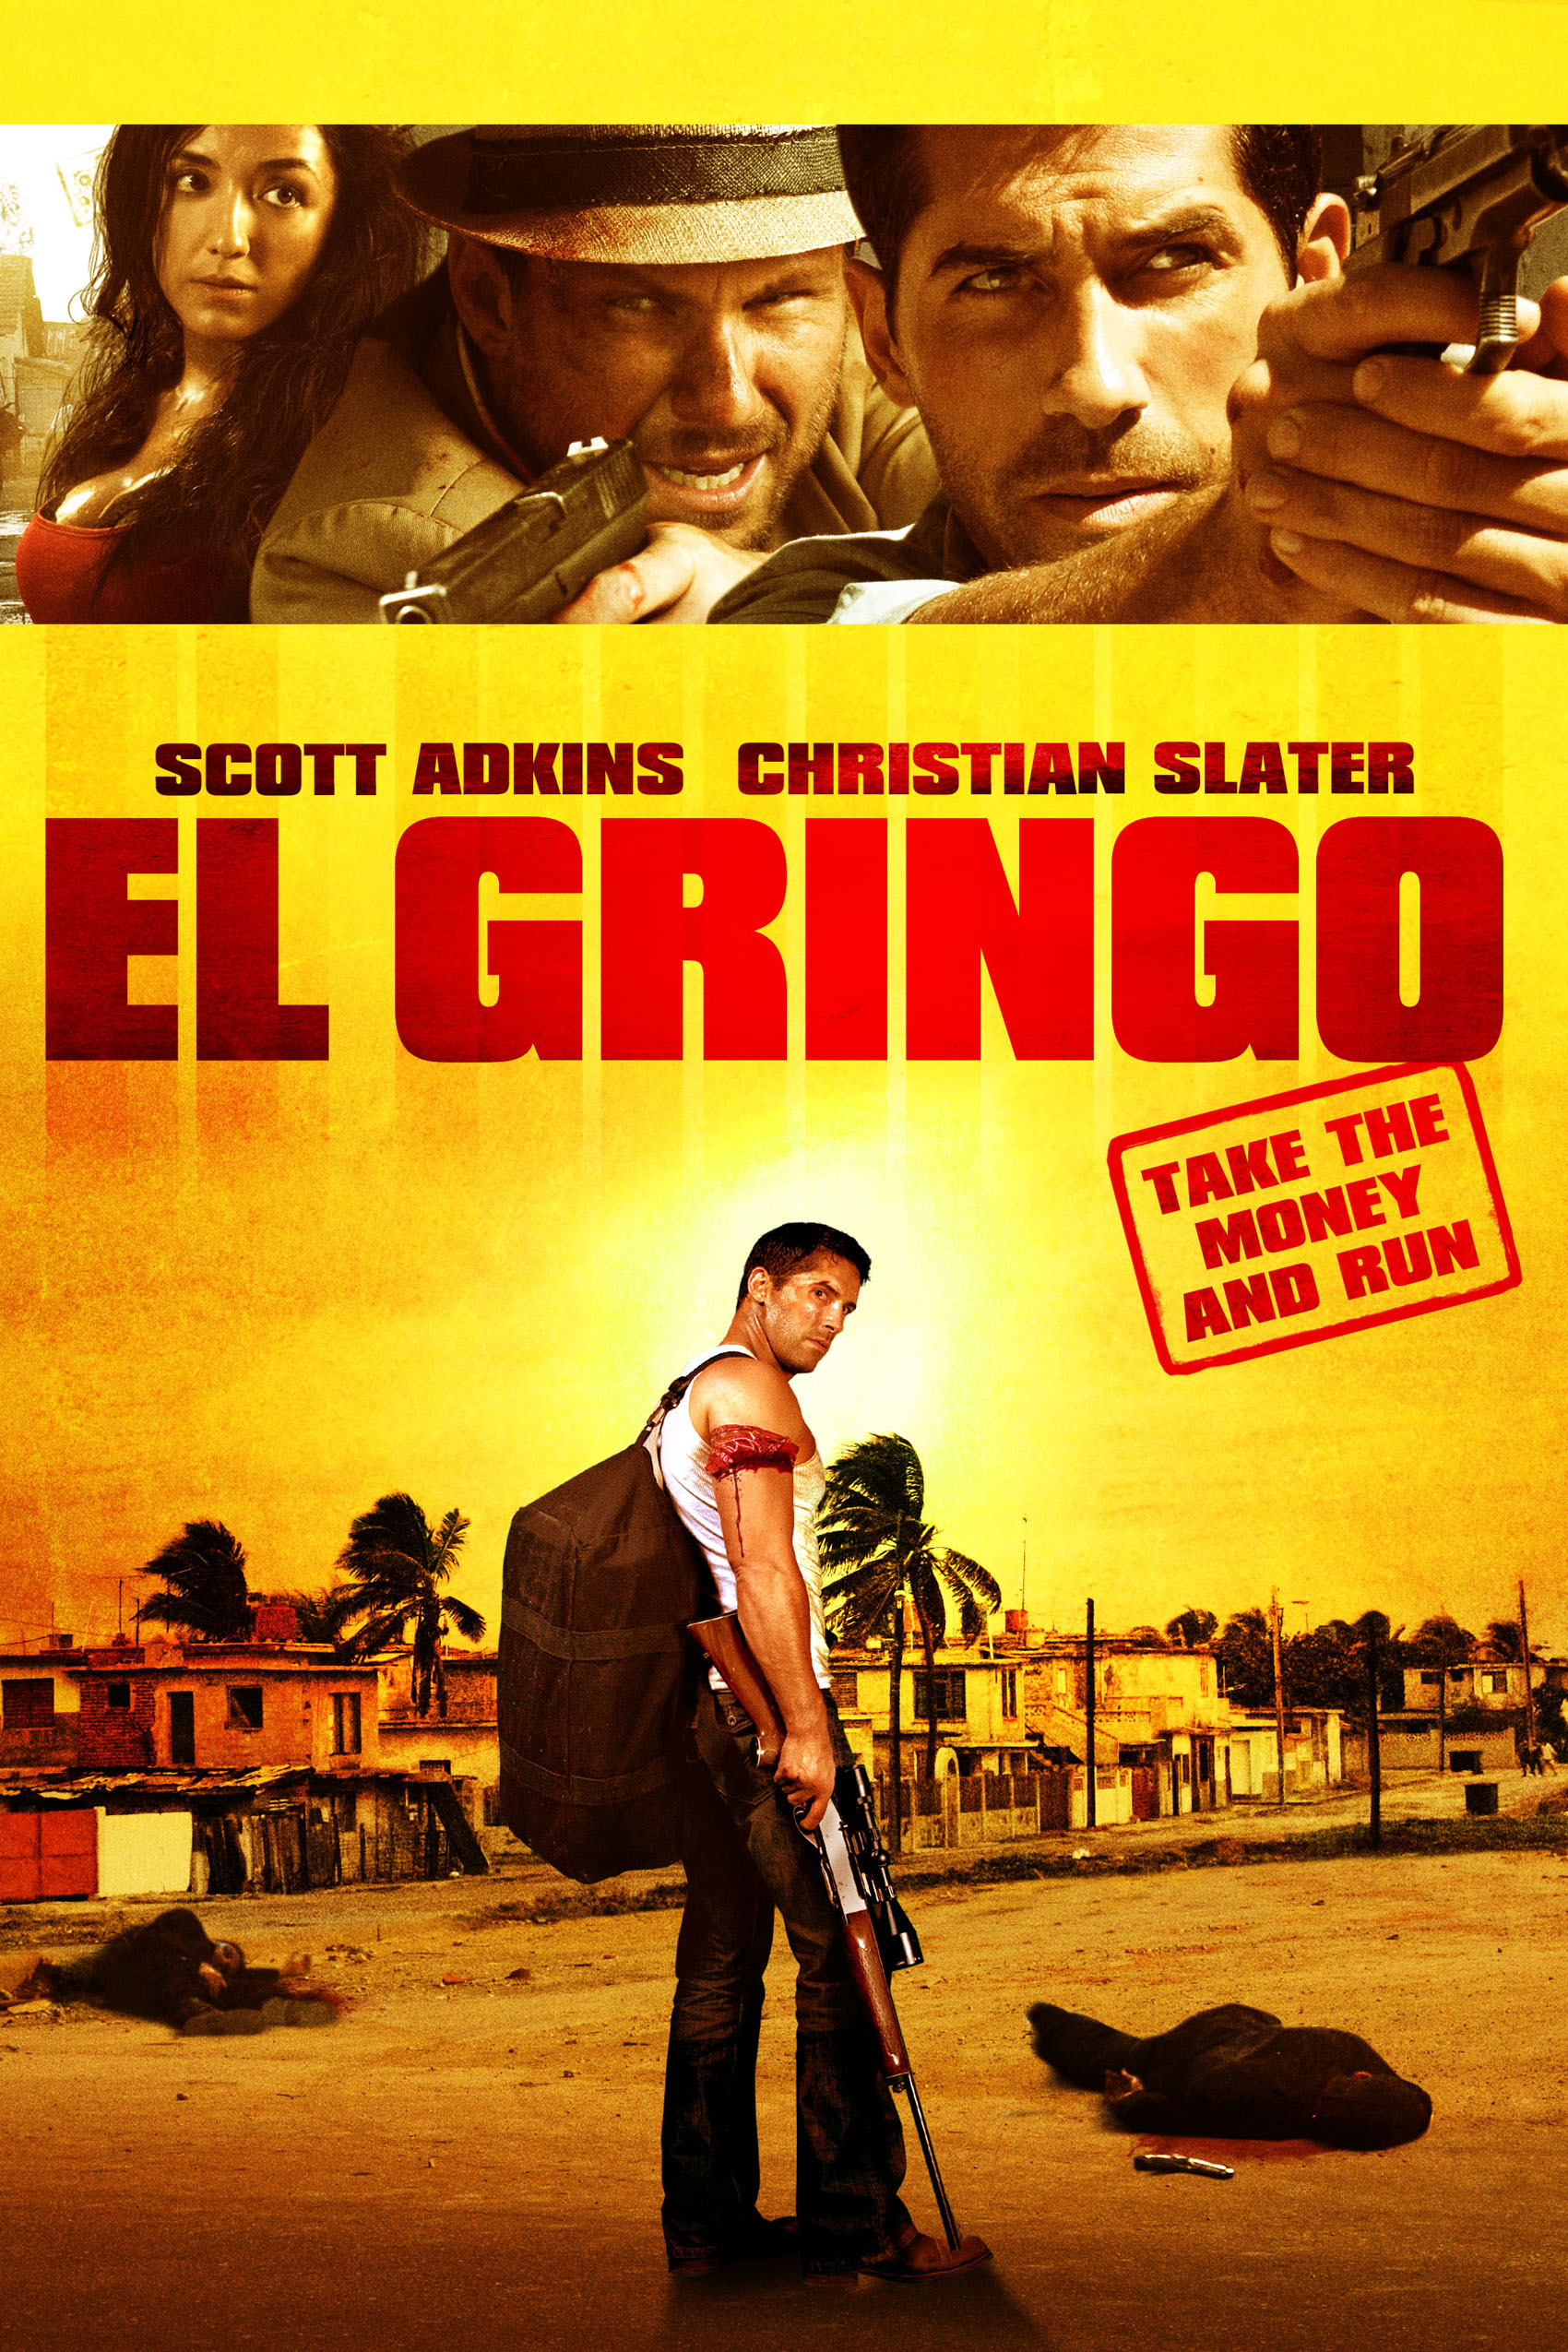 Seven Pistols For A Gringo [1966]